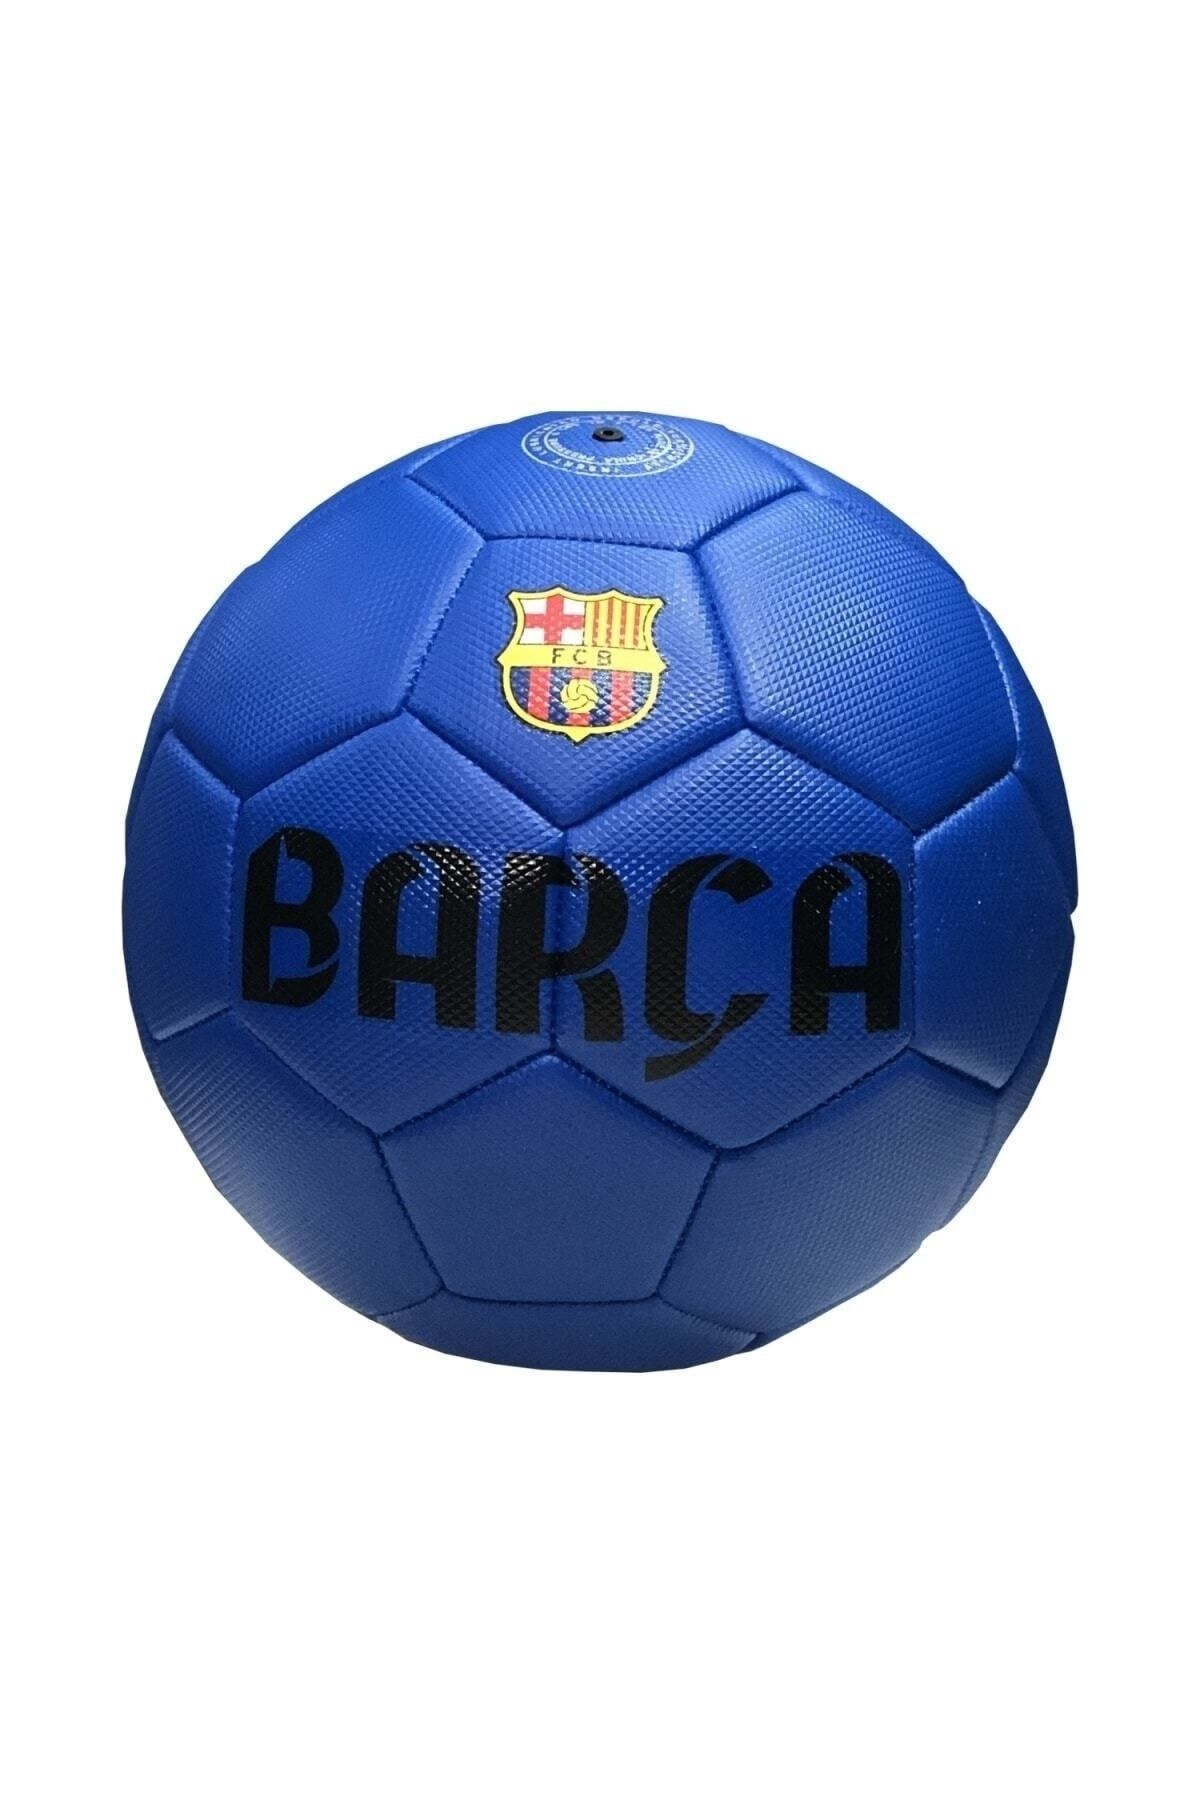 Barcelona Lisanslı Futbol Topu 5 Numara 510142